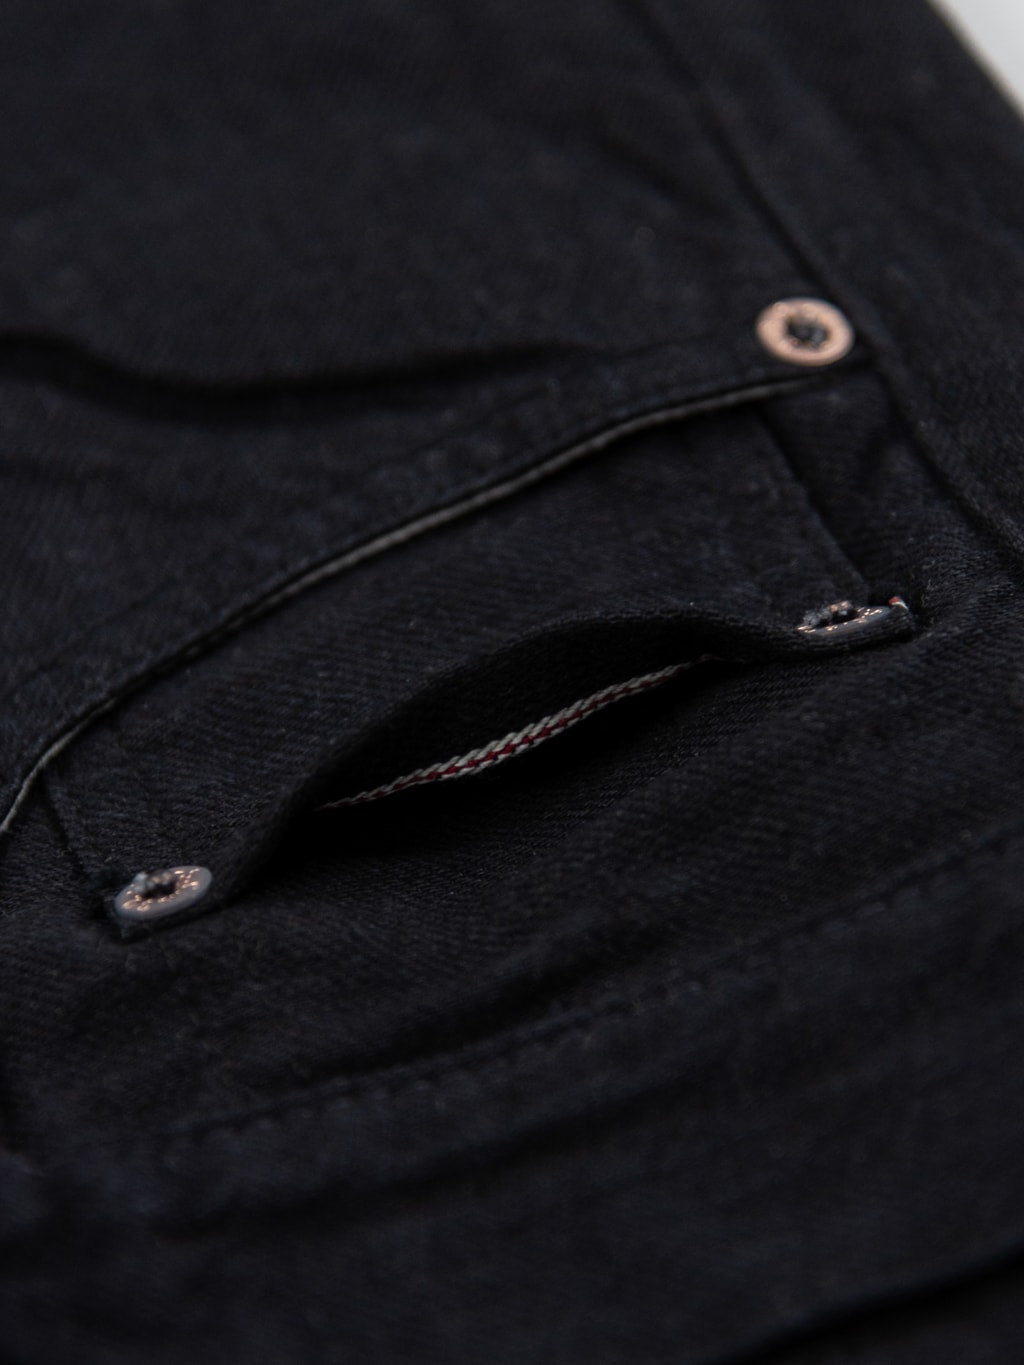 Sugar Cane Type III 13oz Black Denim Slim Jeans selvedge details